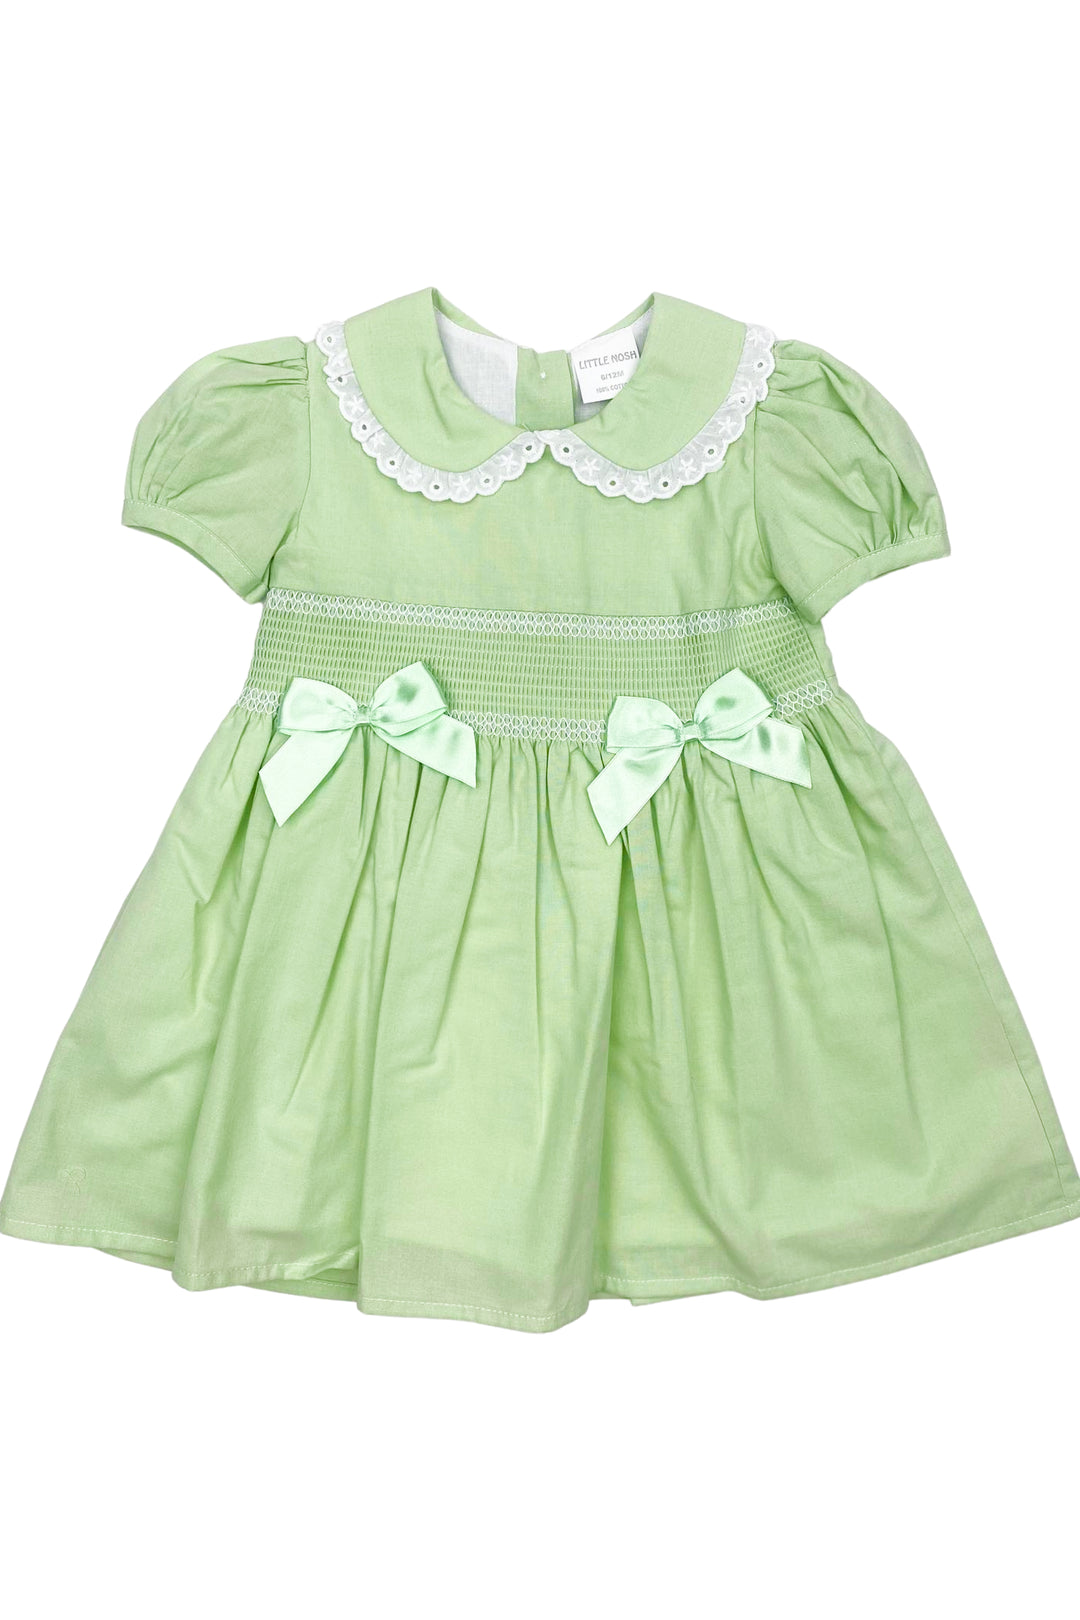 Little Nosh "Naomi" Lime Green Smocked Dress | Millie and John